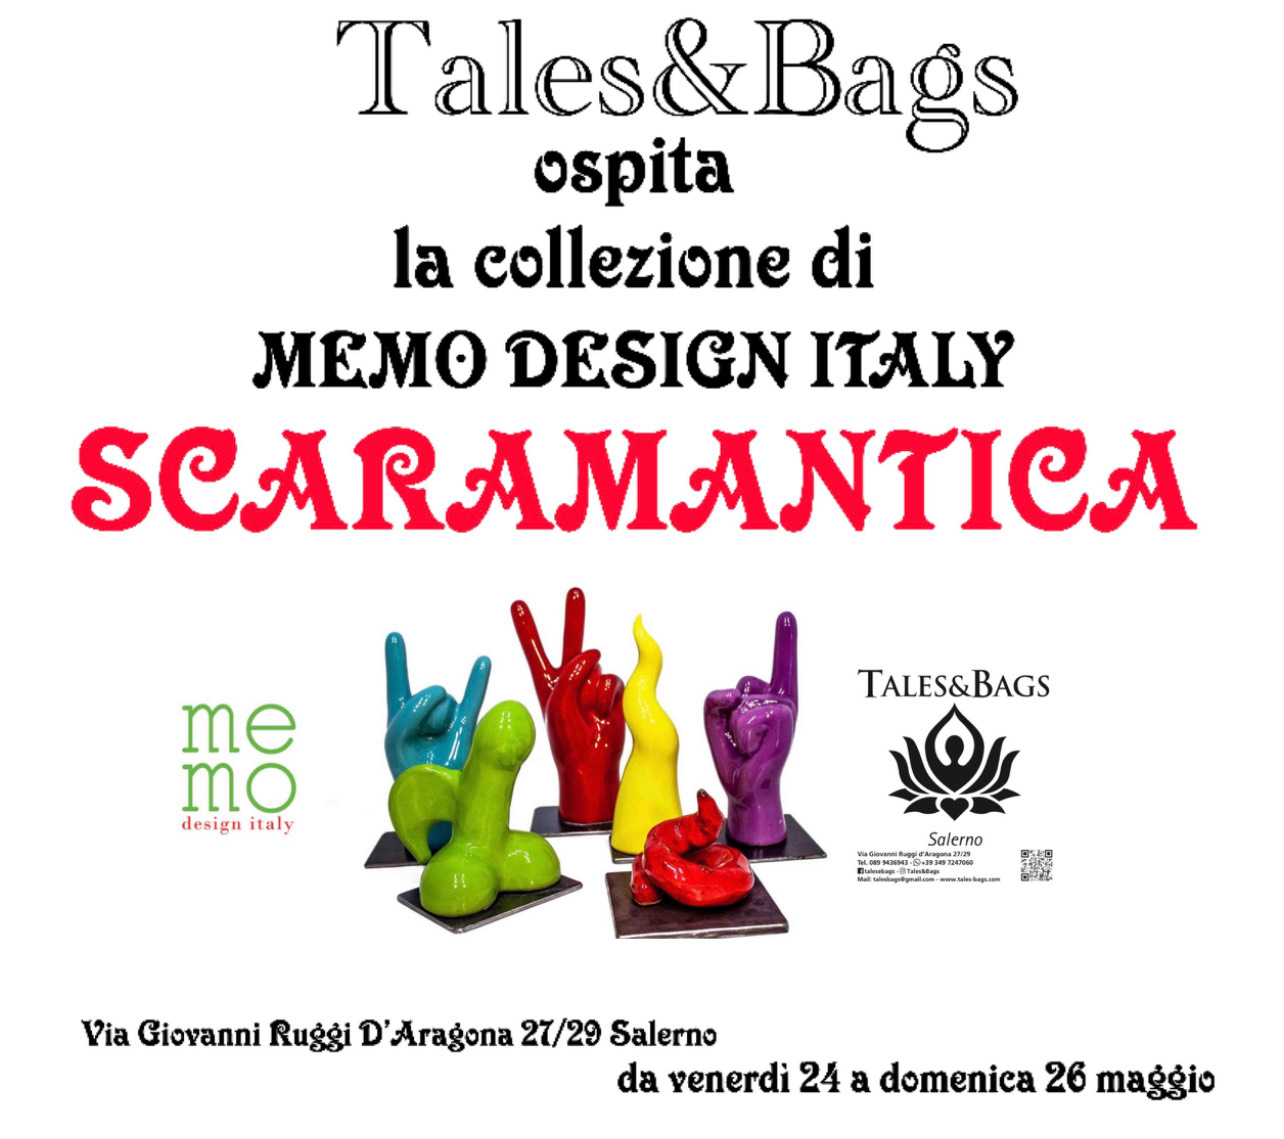 “Scaramantica” ospite di Tales & Bags